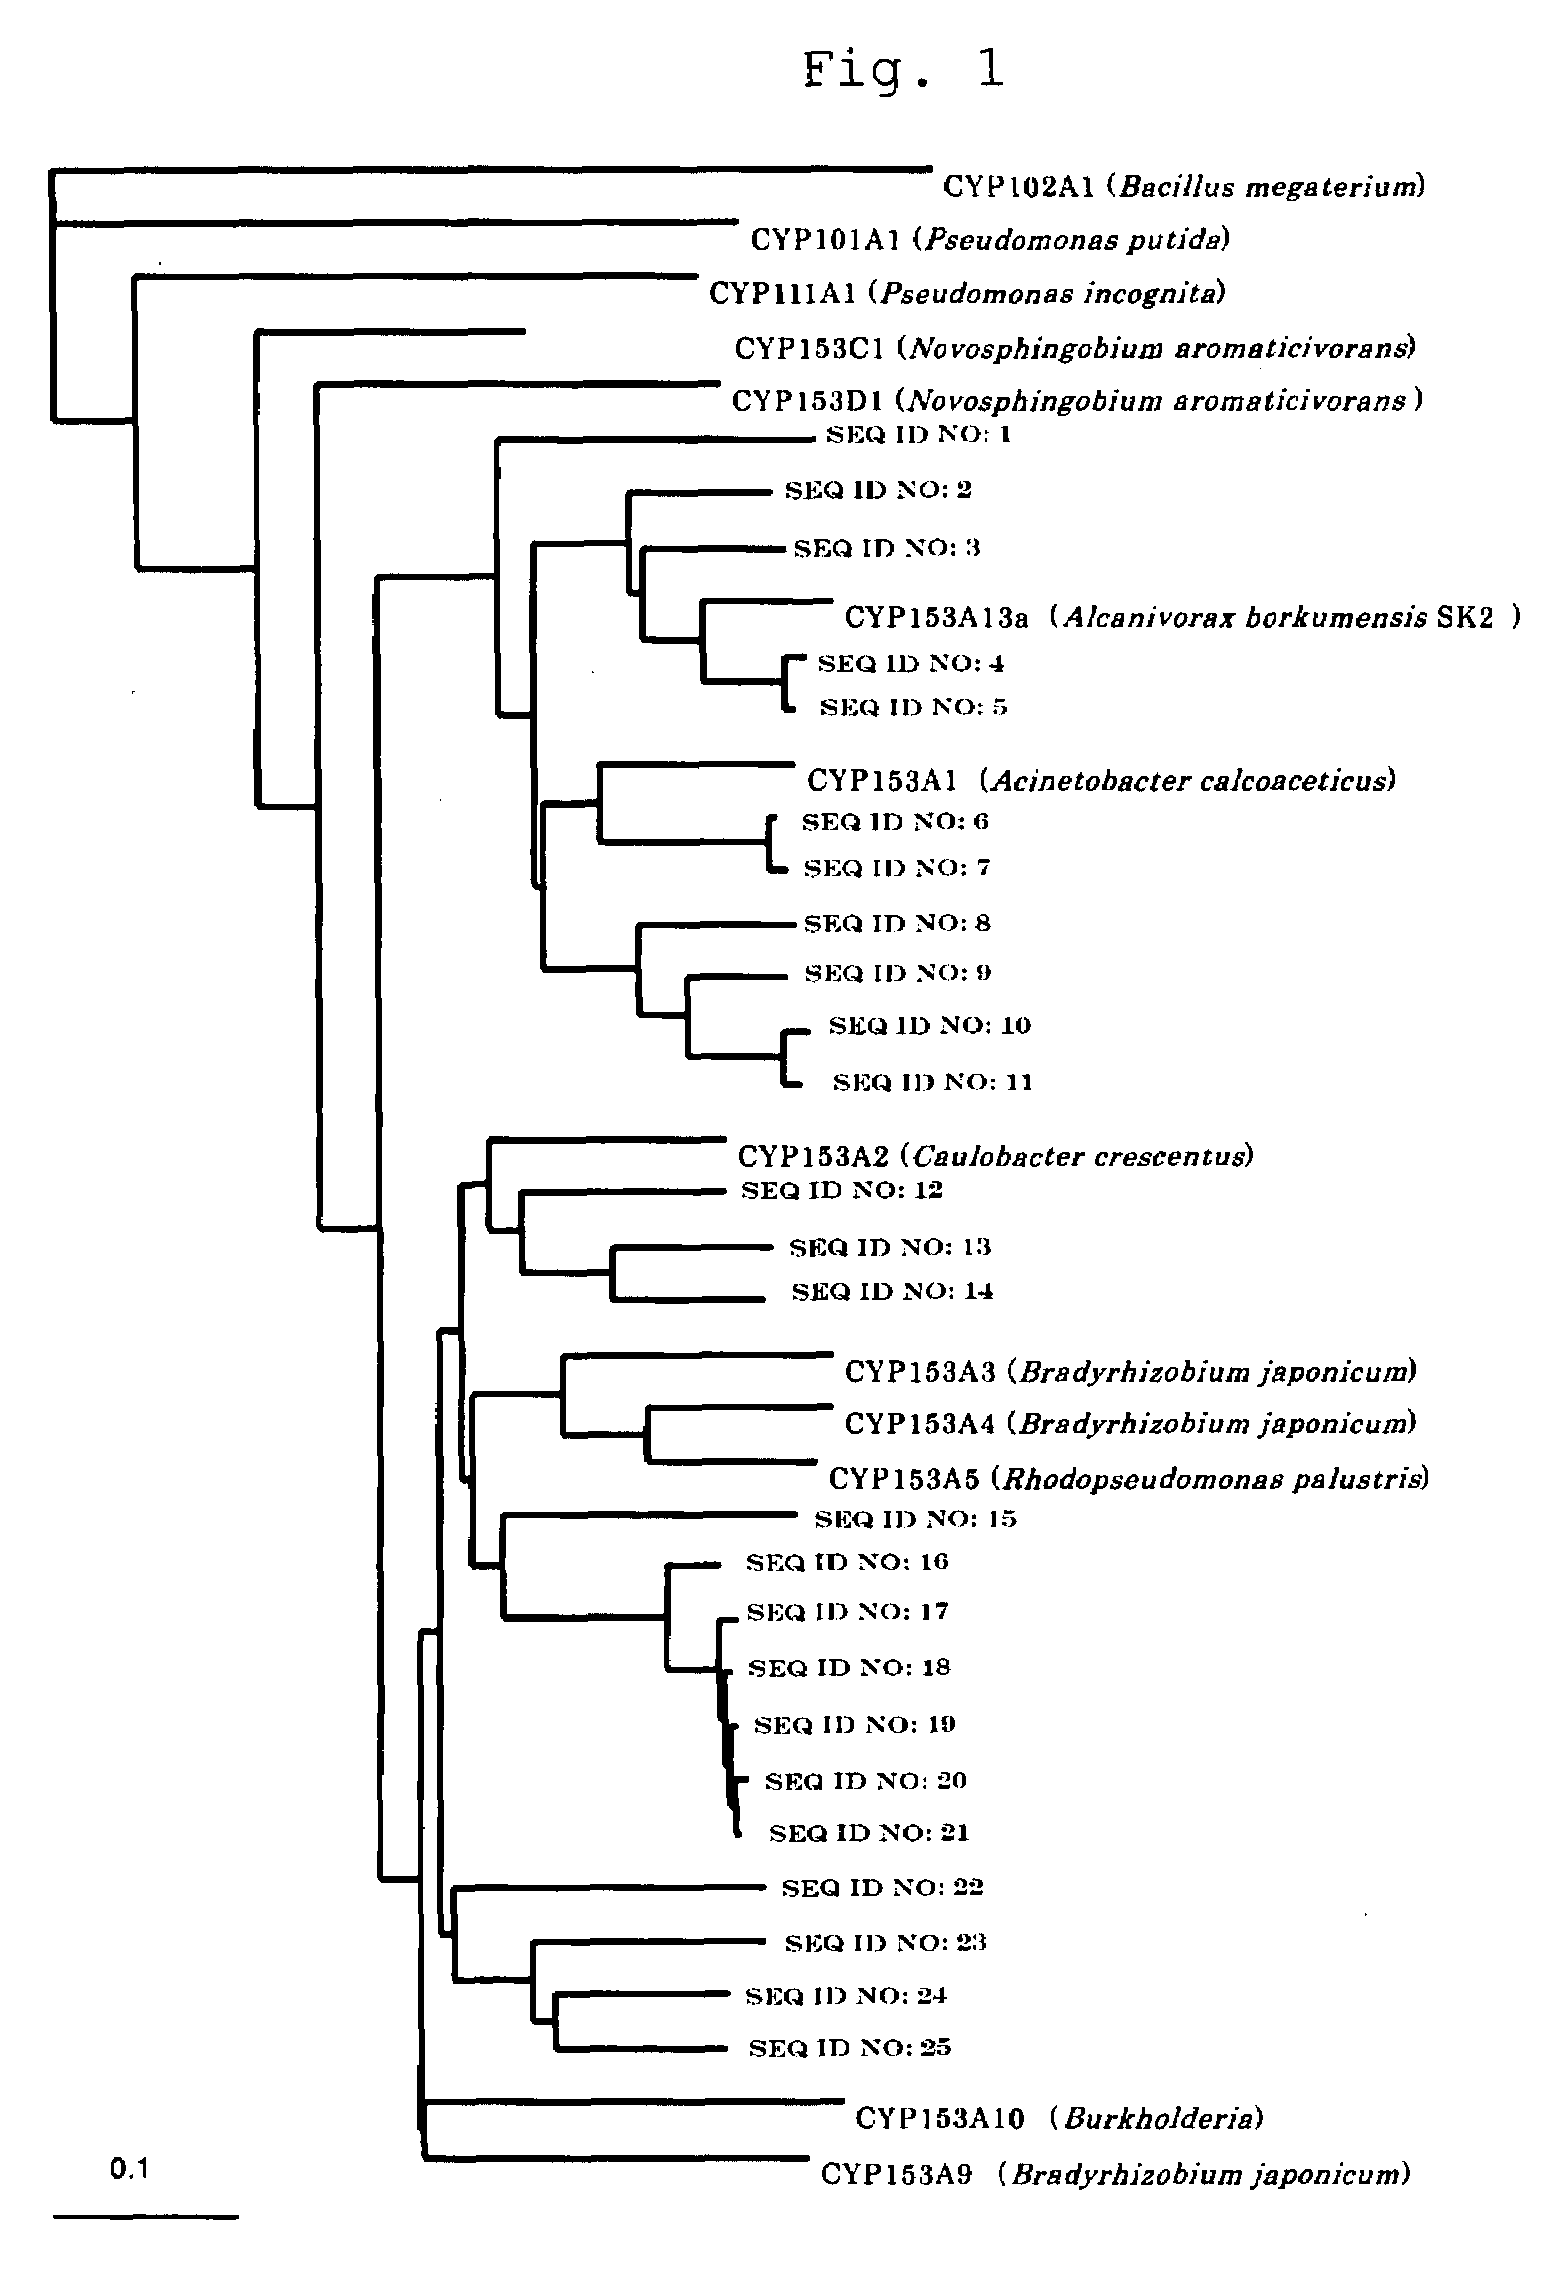 Method of Isolating P450 Gene